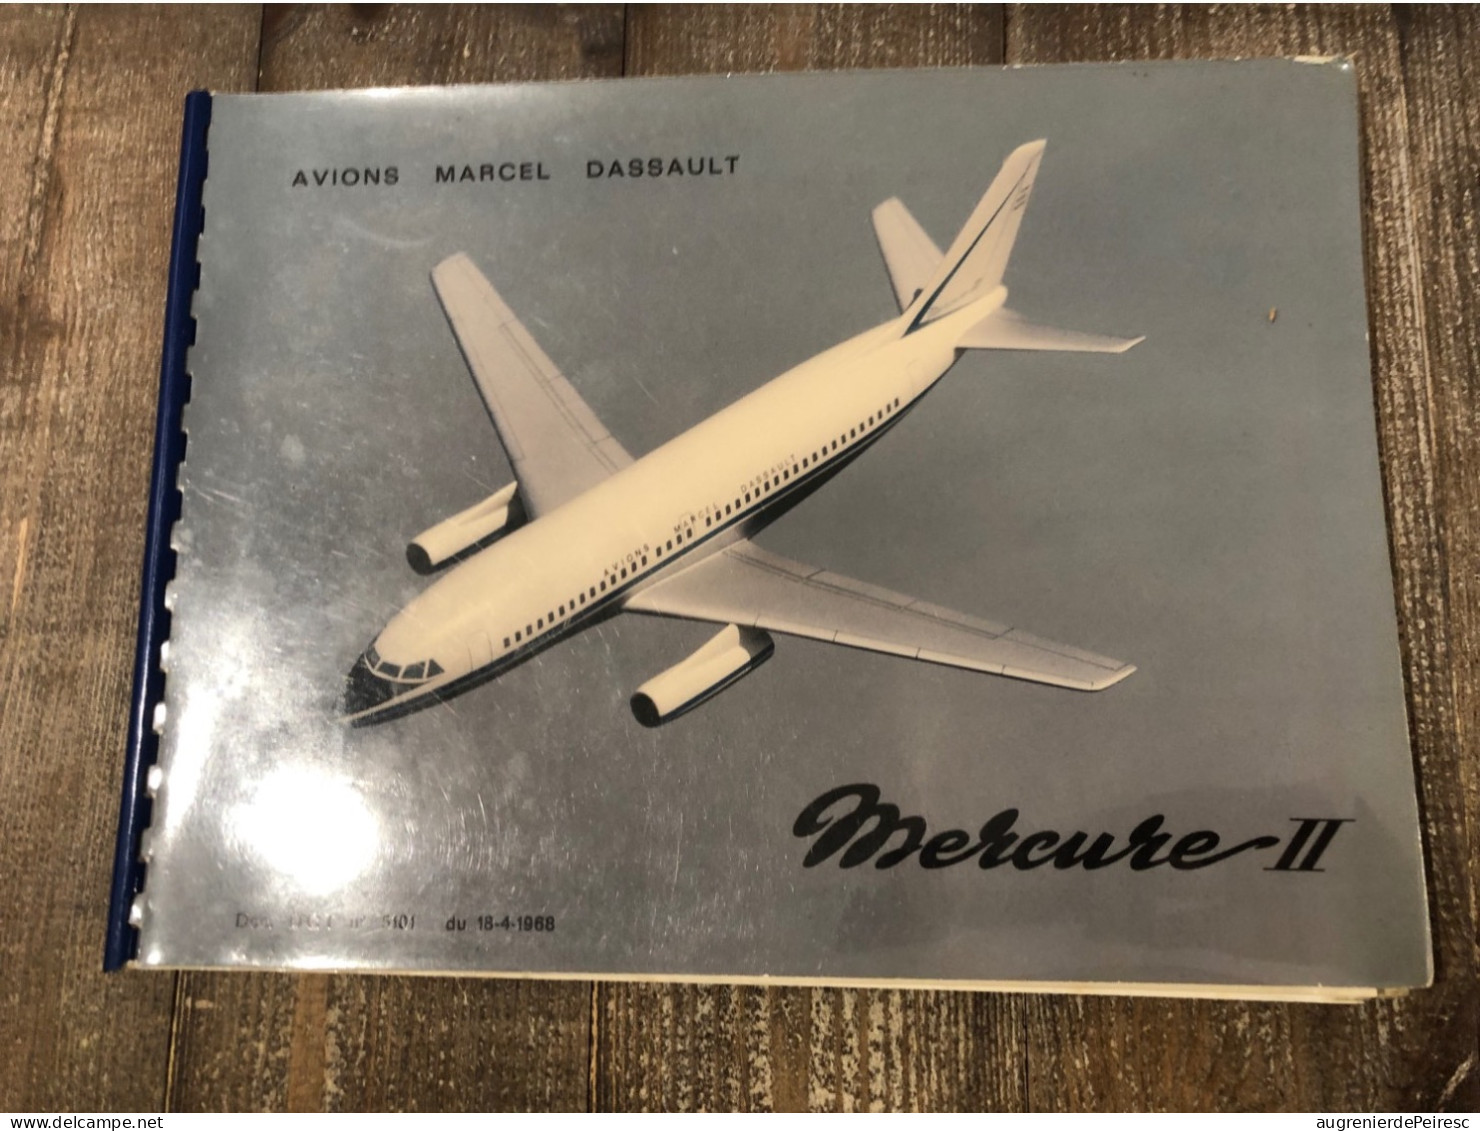 Brochures Dassault Sur Le Mercure II 1968 - Manuali